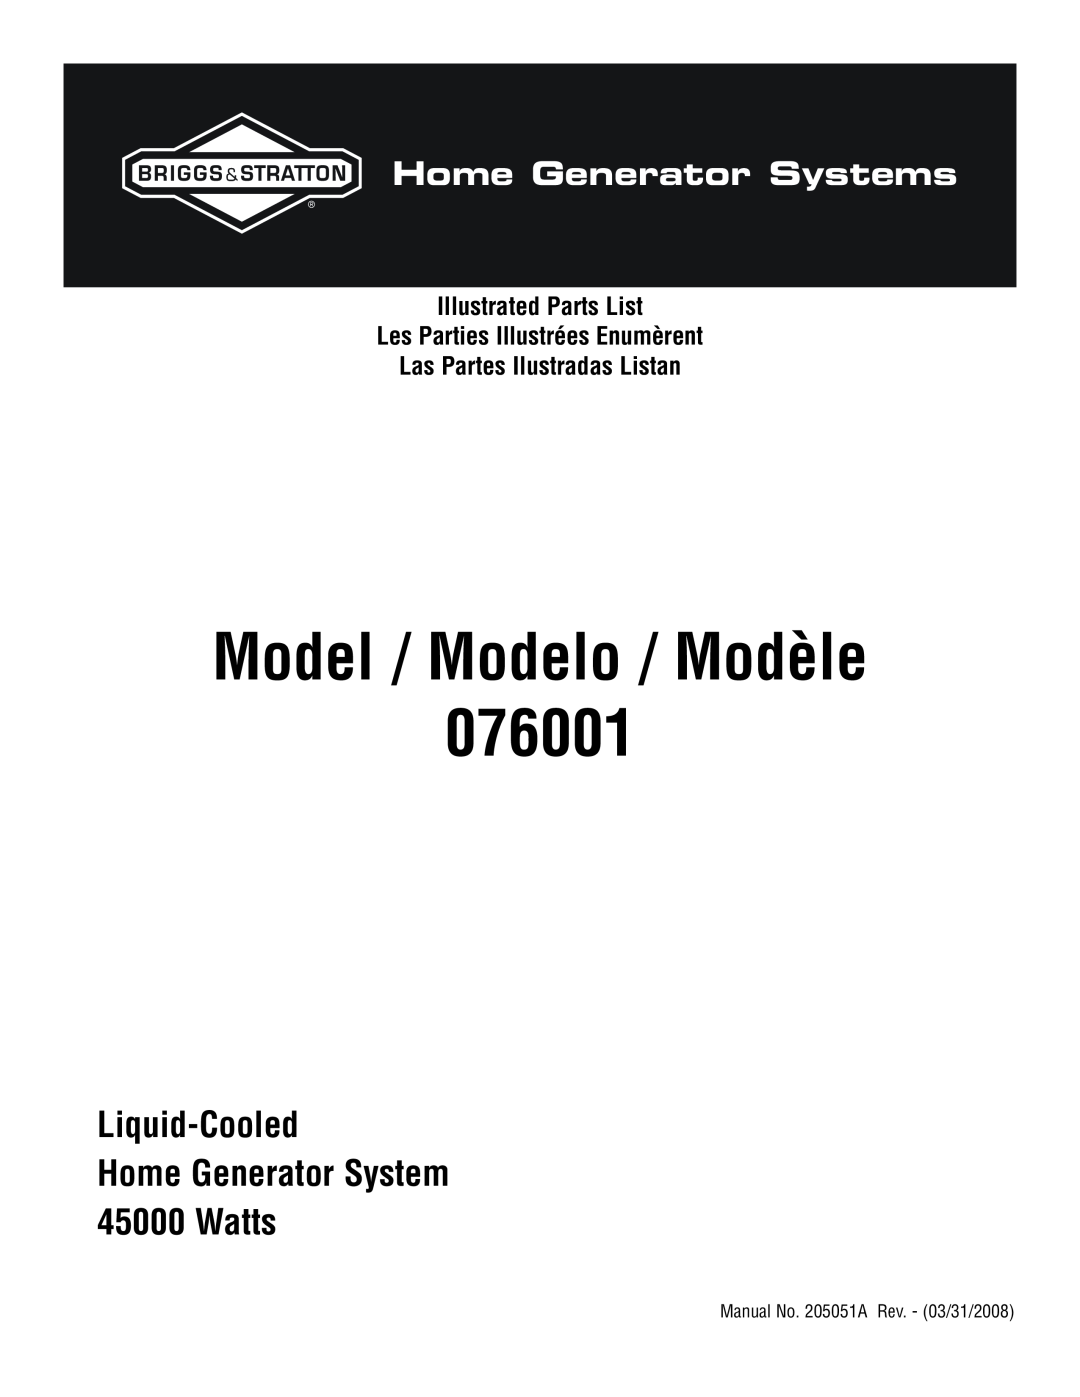 Briggs & Stratton 76001 manual Model / Modelo / Modèle, Liquid-Cooled Home Generator System 45000 Watts 